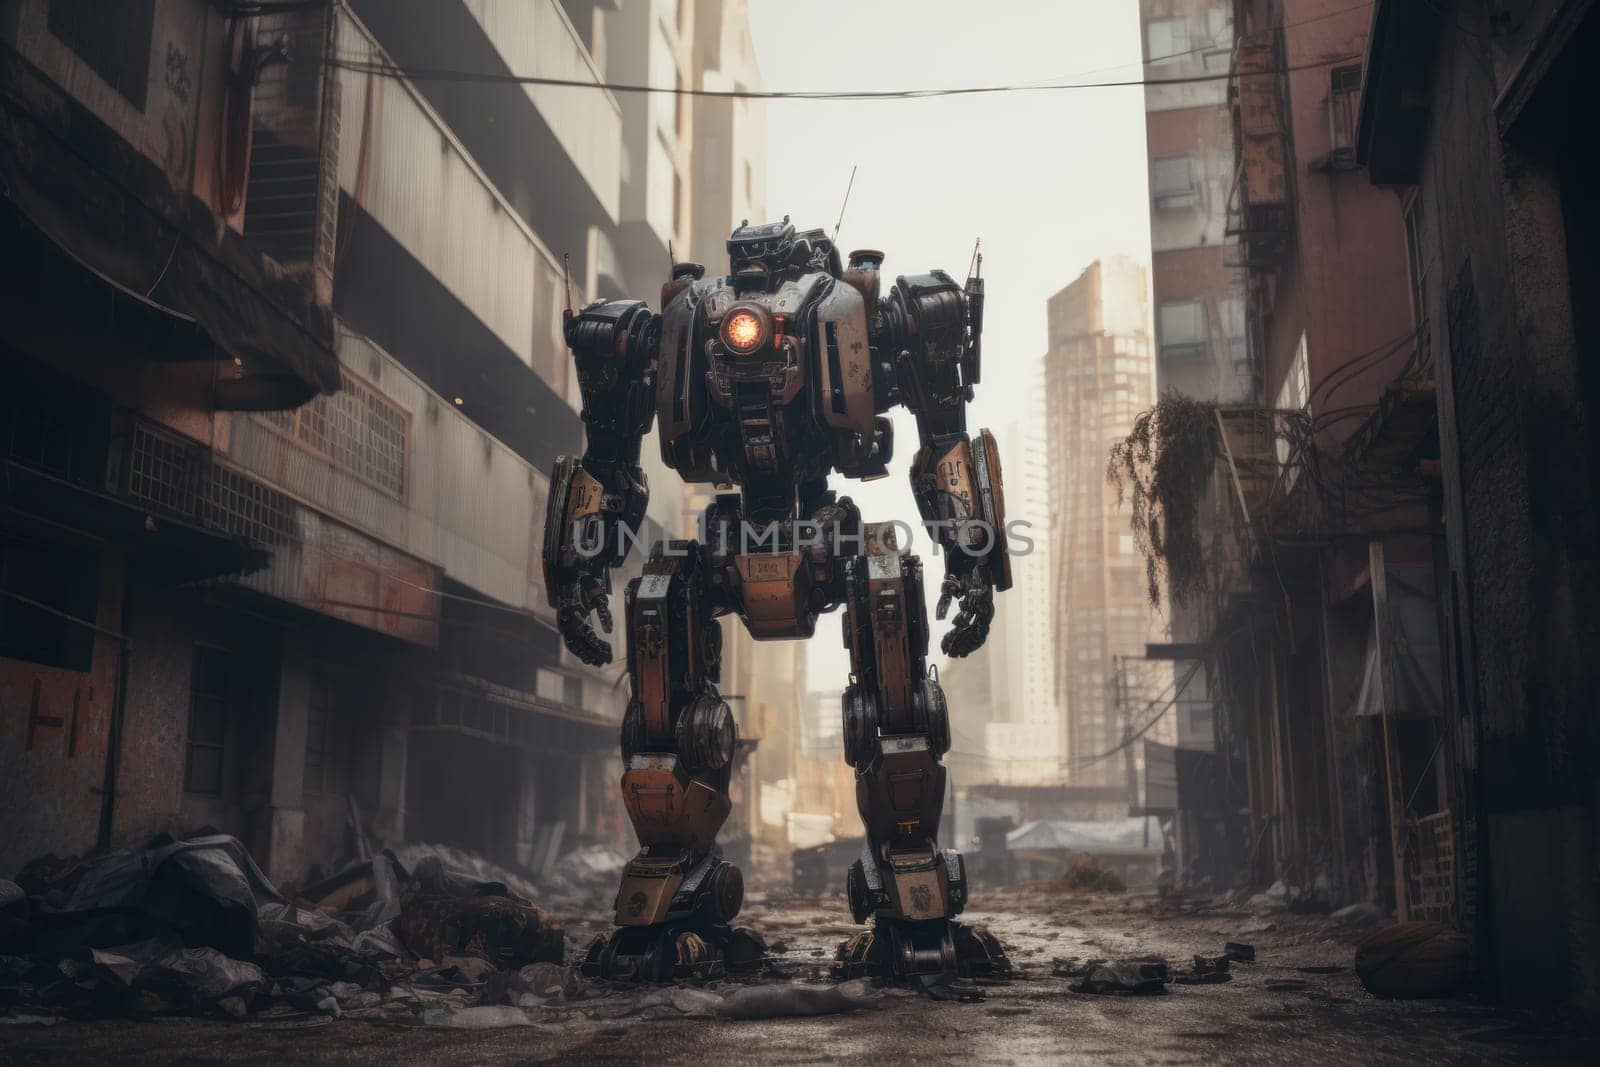 Giant city robot. Future cyborg. Generate Ai